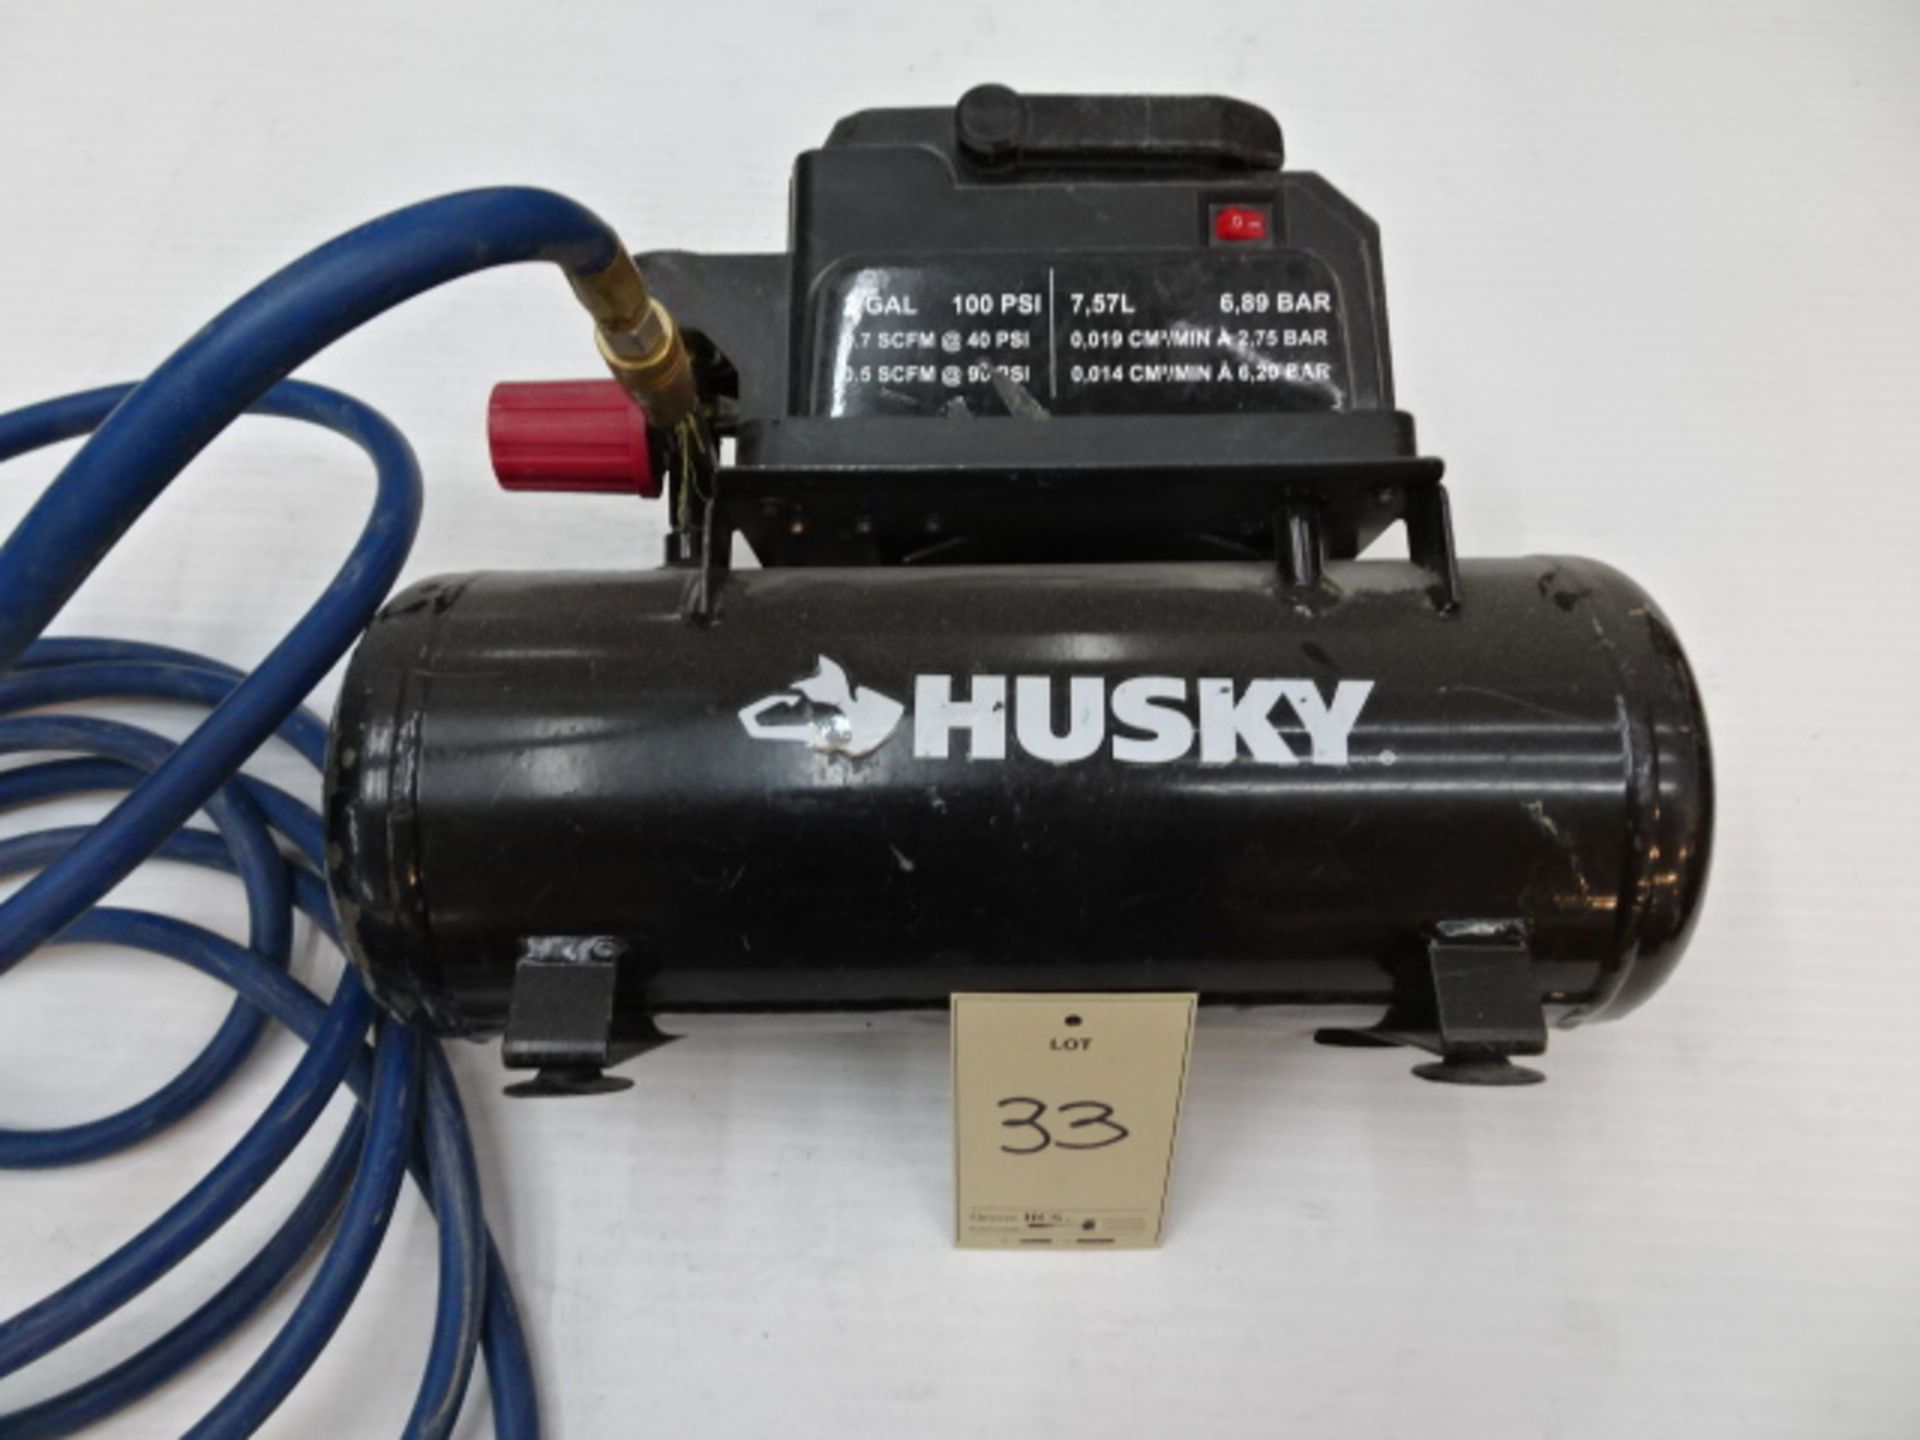 Compresseur d'air "Husky" Air compressor